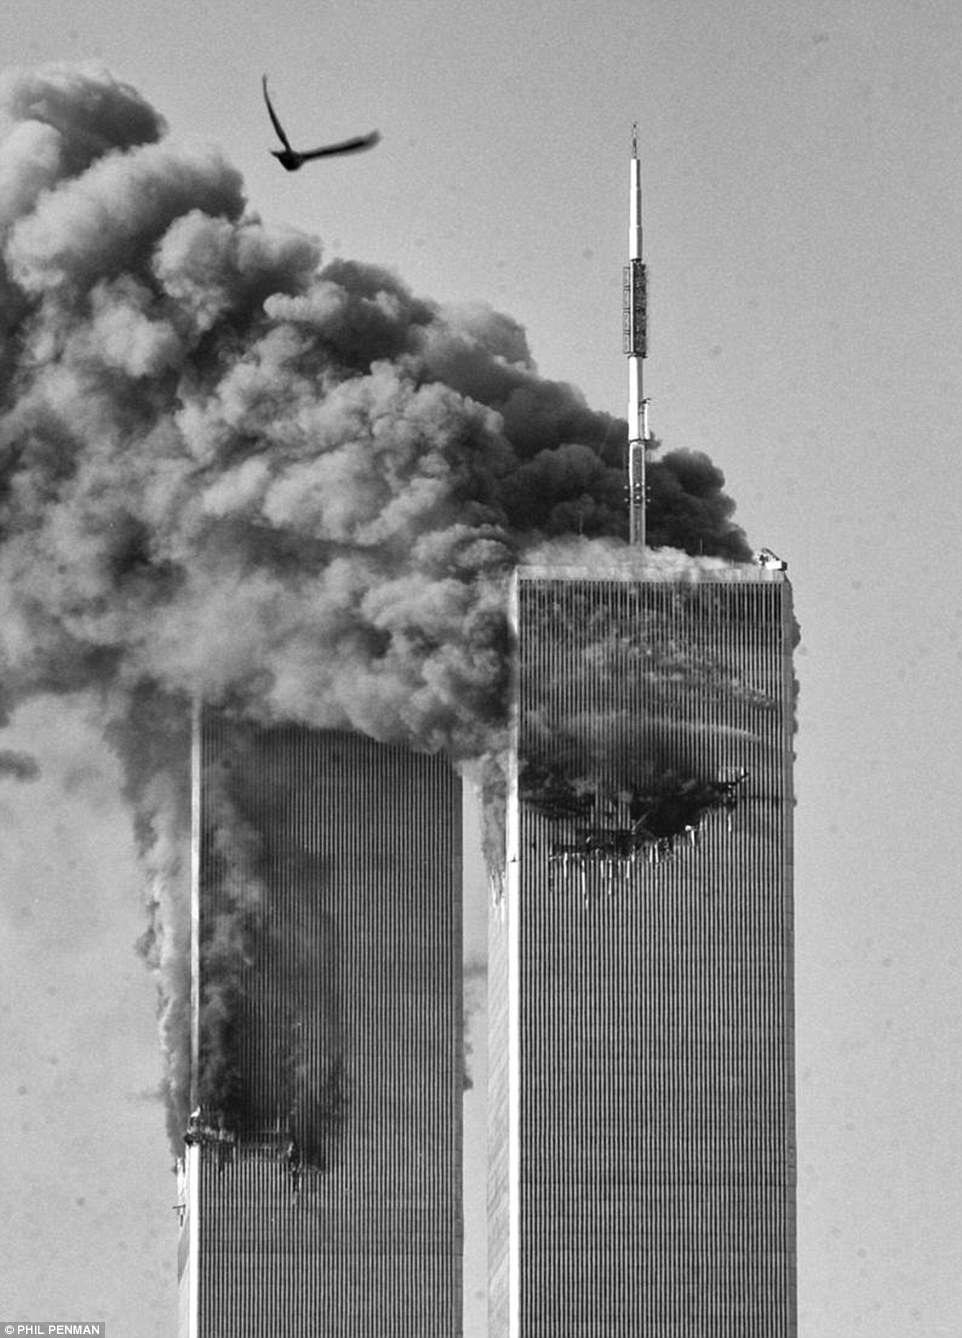 Фотография: Снимки британца Фила Пенмана, который оказался на месте теракта 9/11 №3 - BigPicture.ru